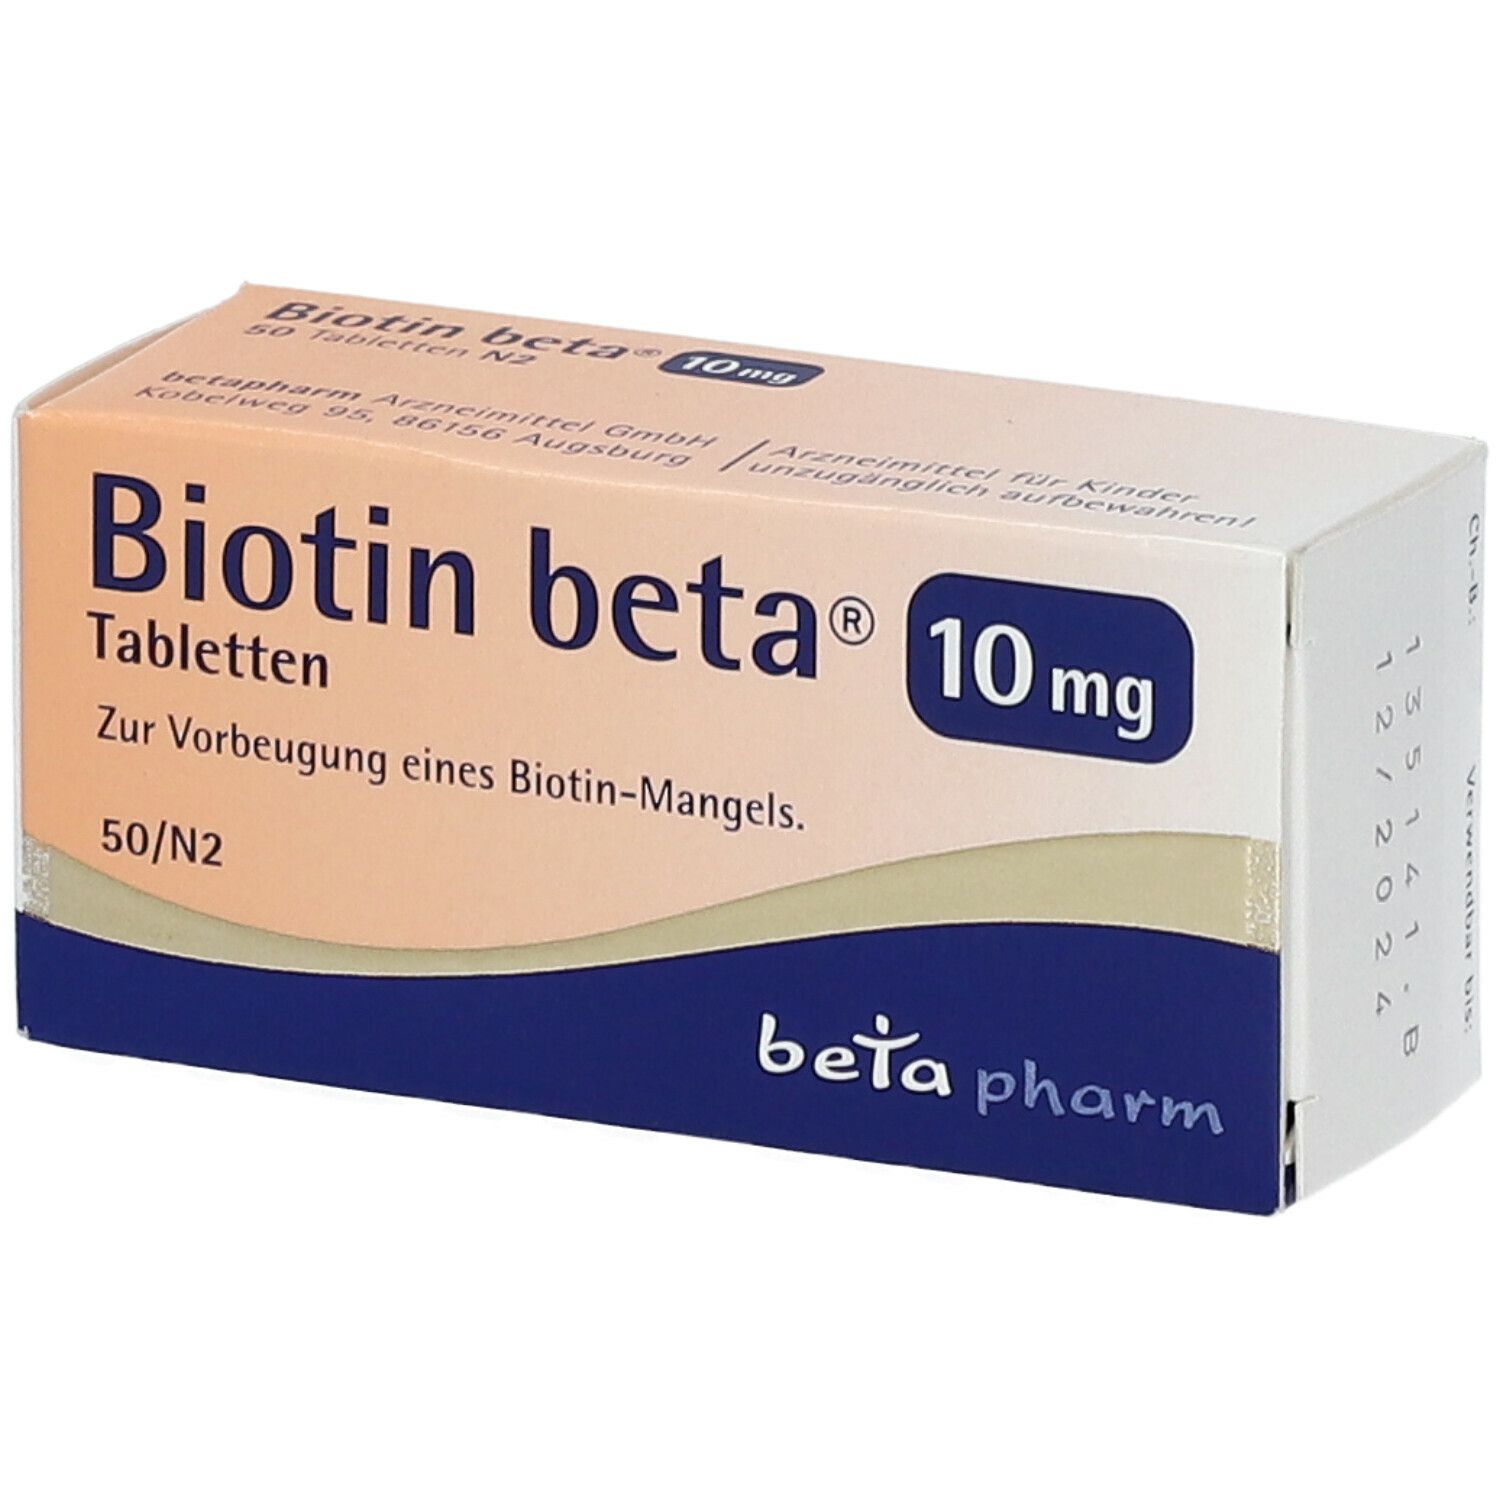 Biotin beta® 10 mg